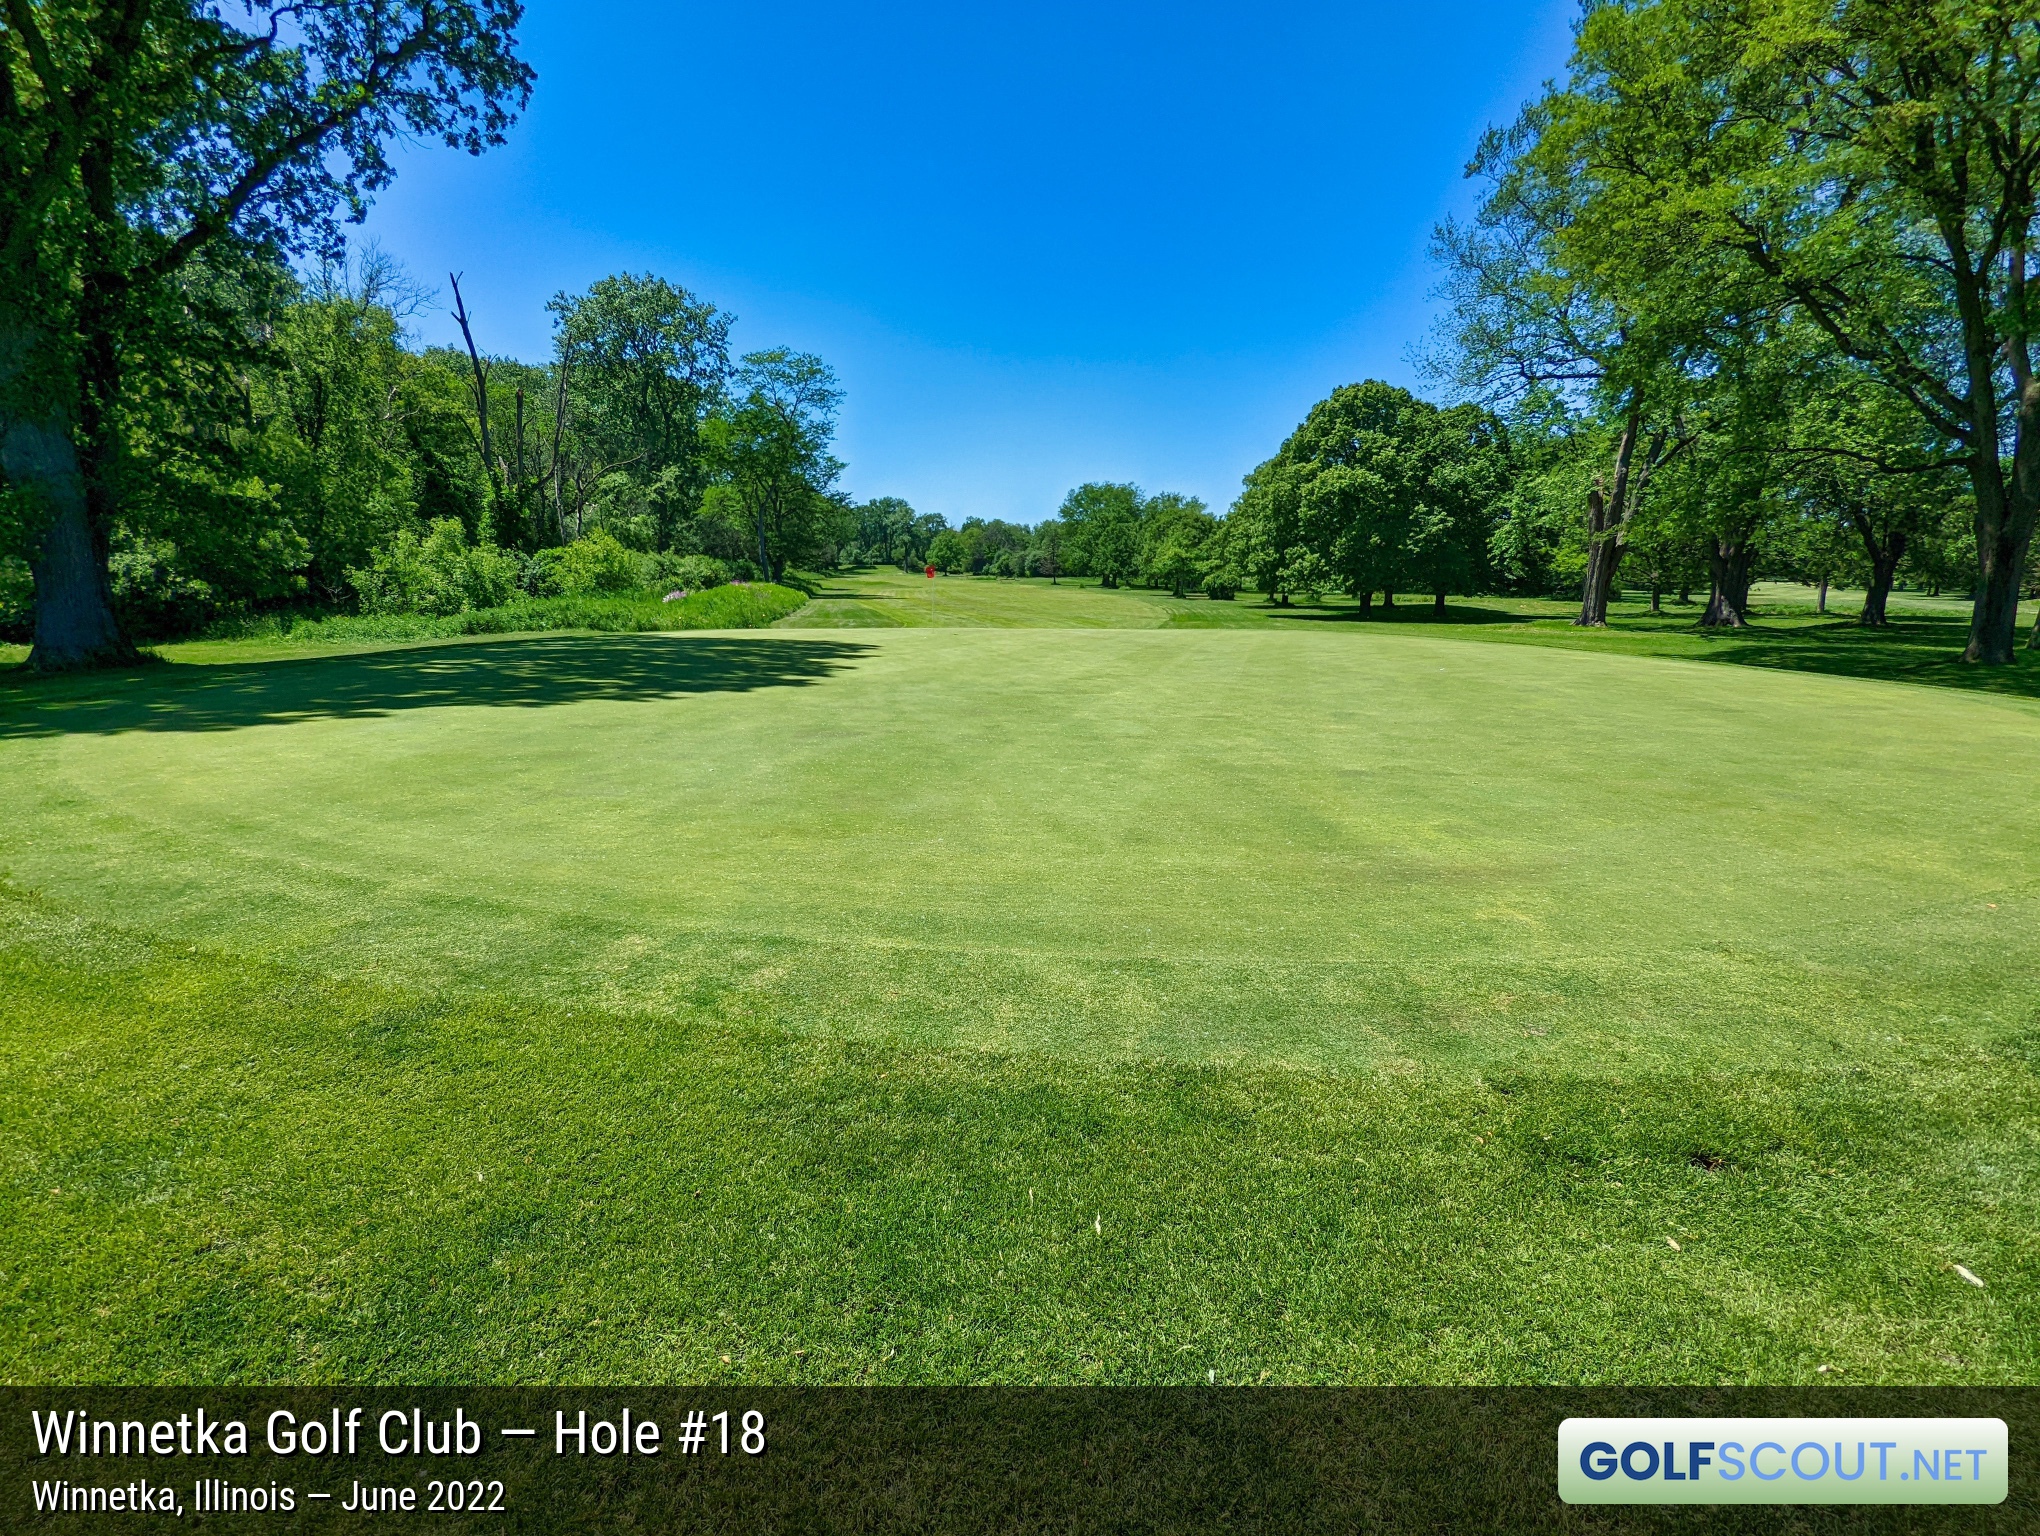 Photo of hole #18 at Winnetka Golf Club in Winnetka, Illinois. 